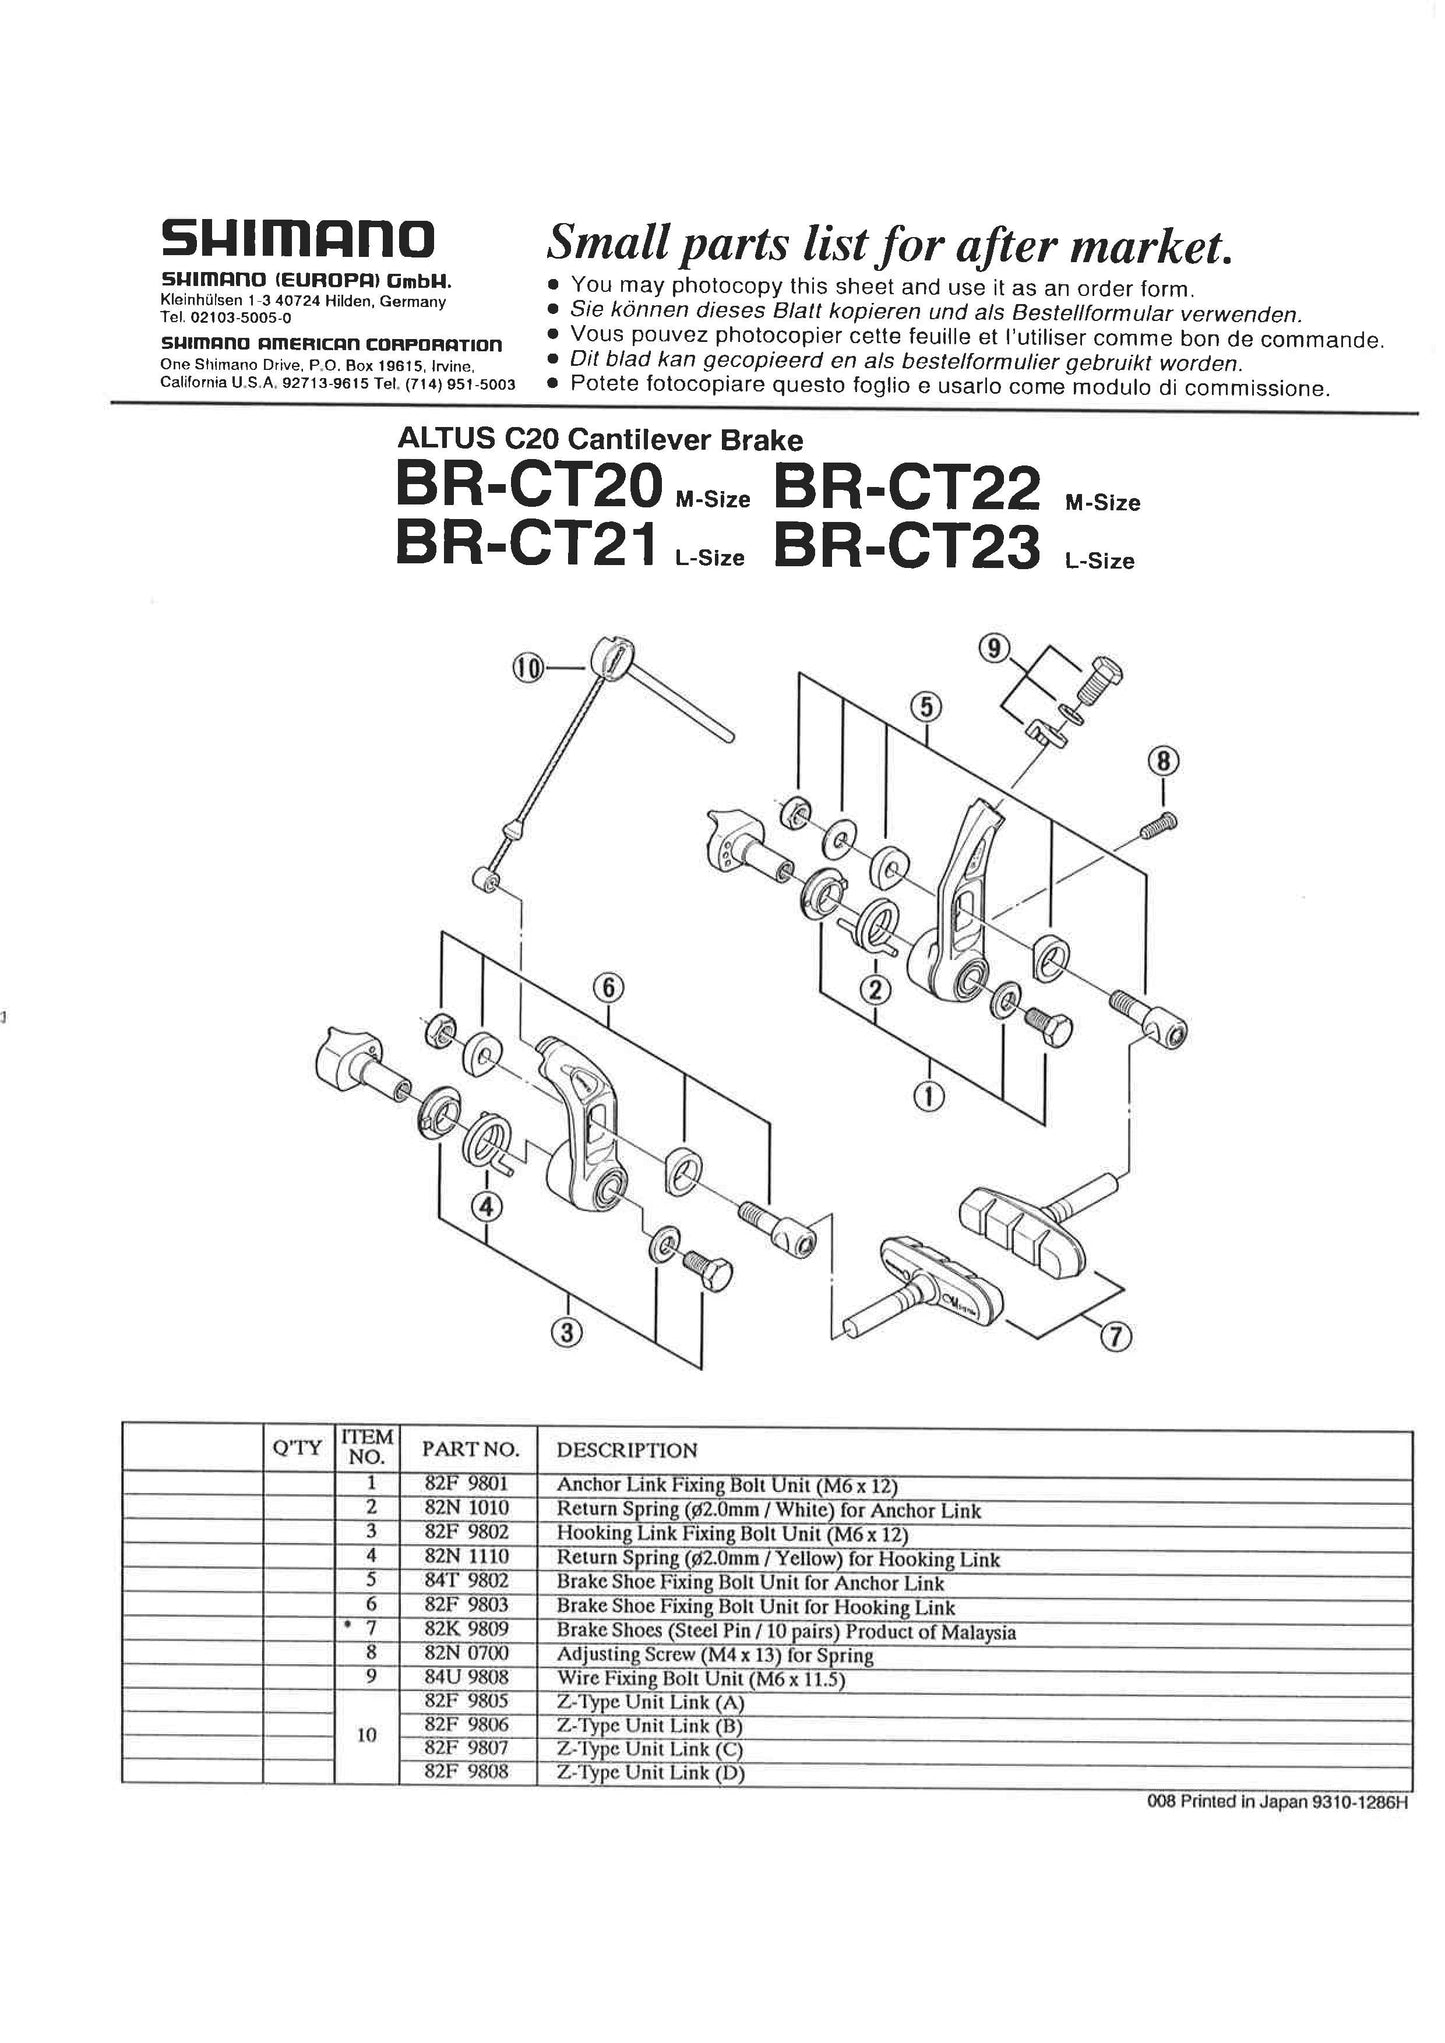 SHIMANO Altus BR-CT20 Cantilever Brake Z-Type Unit Link (A) 4-Piston - Y82F98051-Pit Crew Cycles